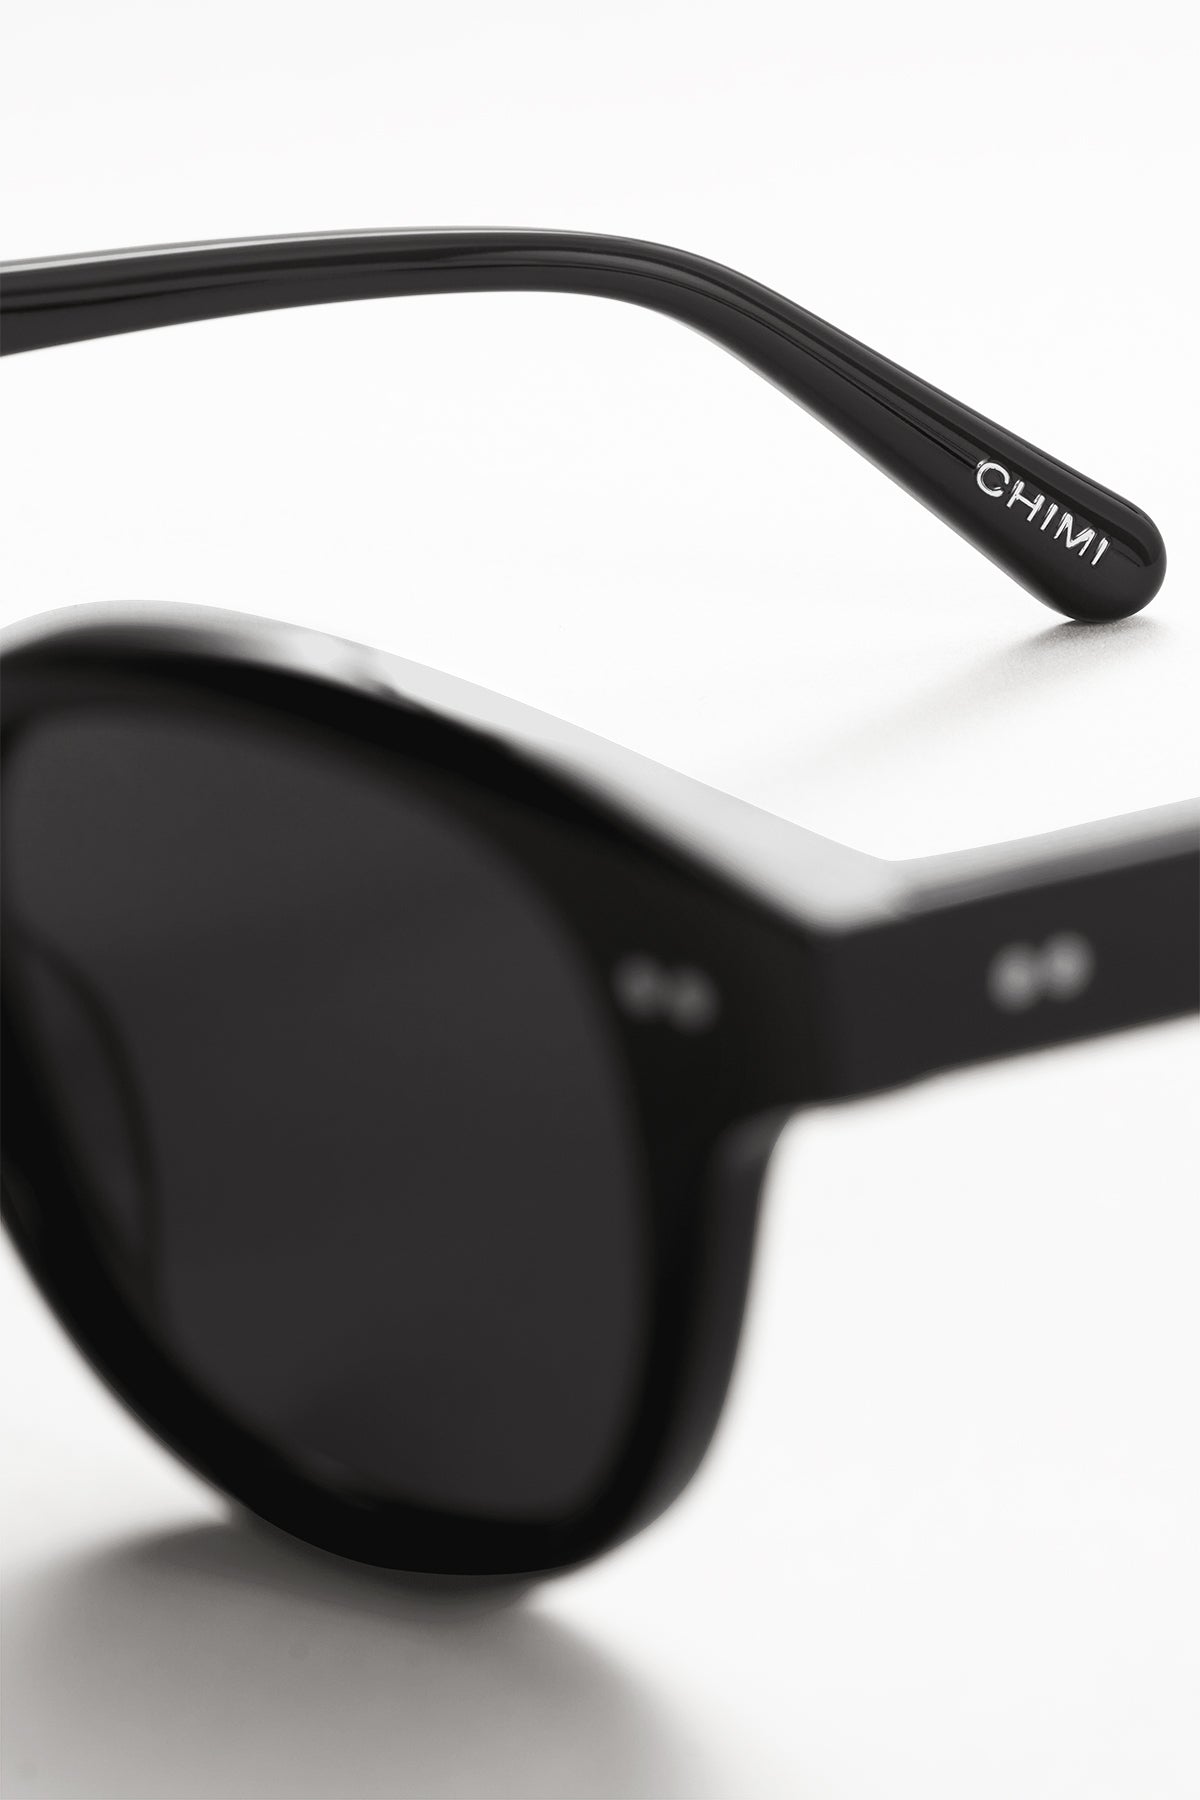   Chimi 01 Sunglasses Black Detail 